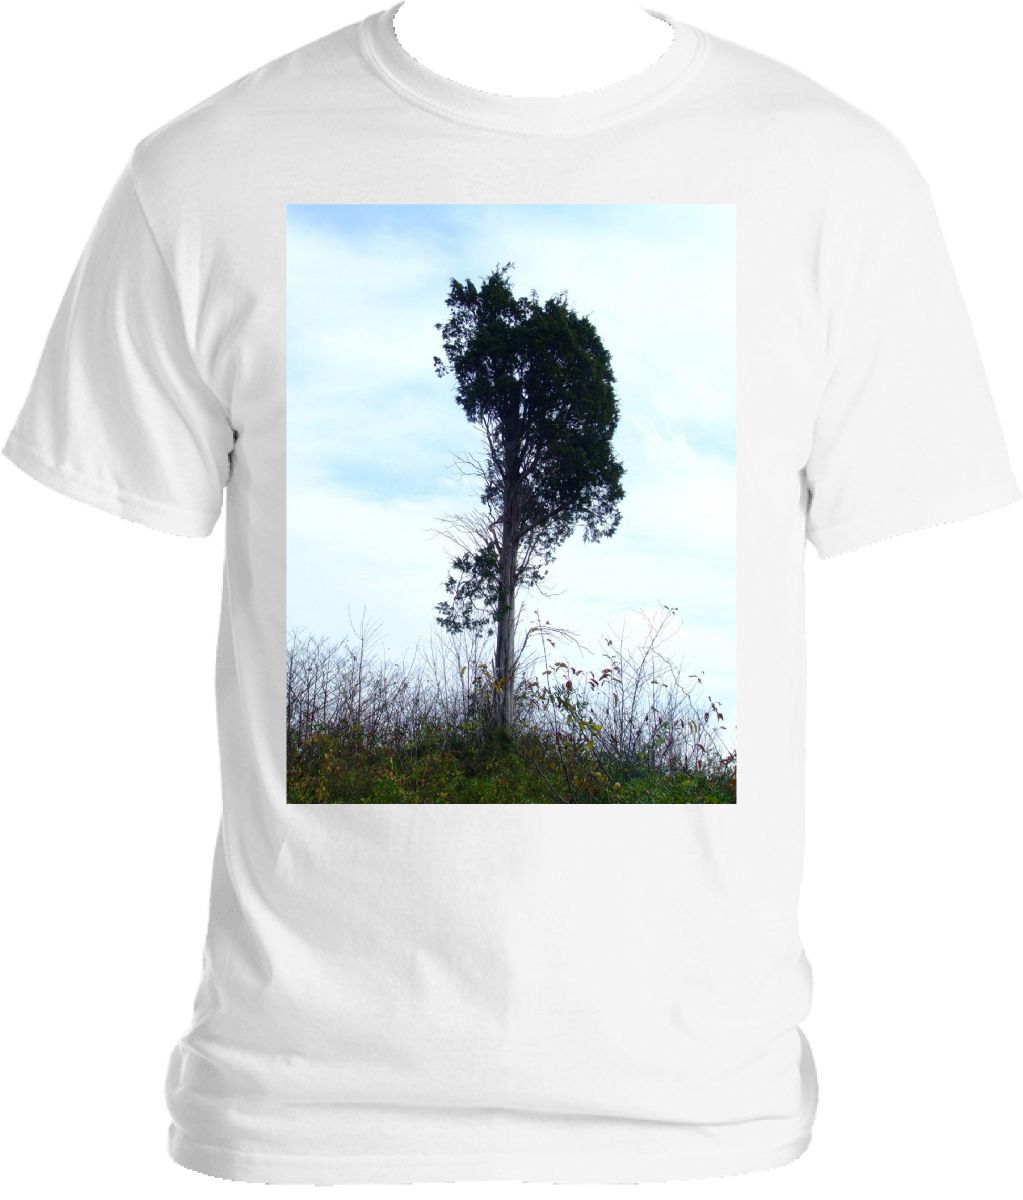 Tree T-shirt 2